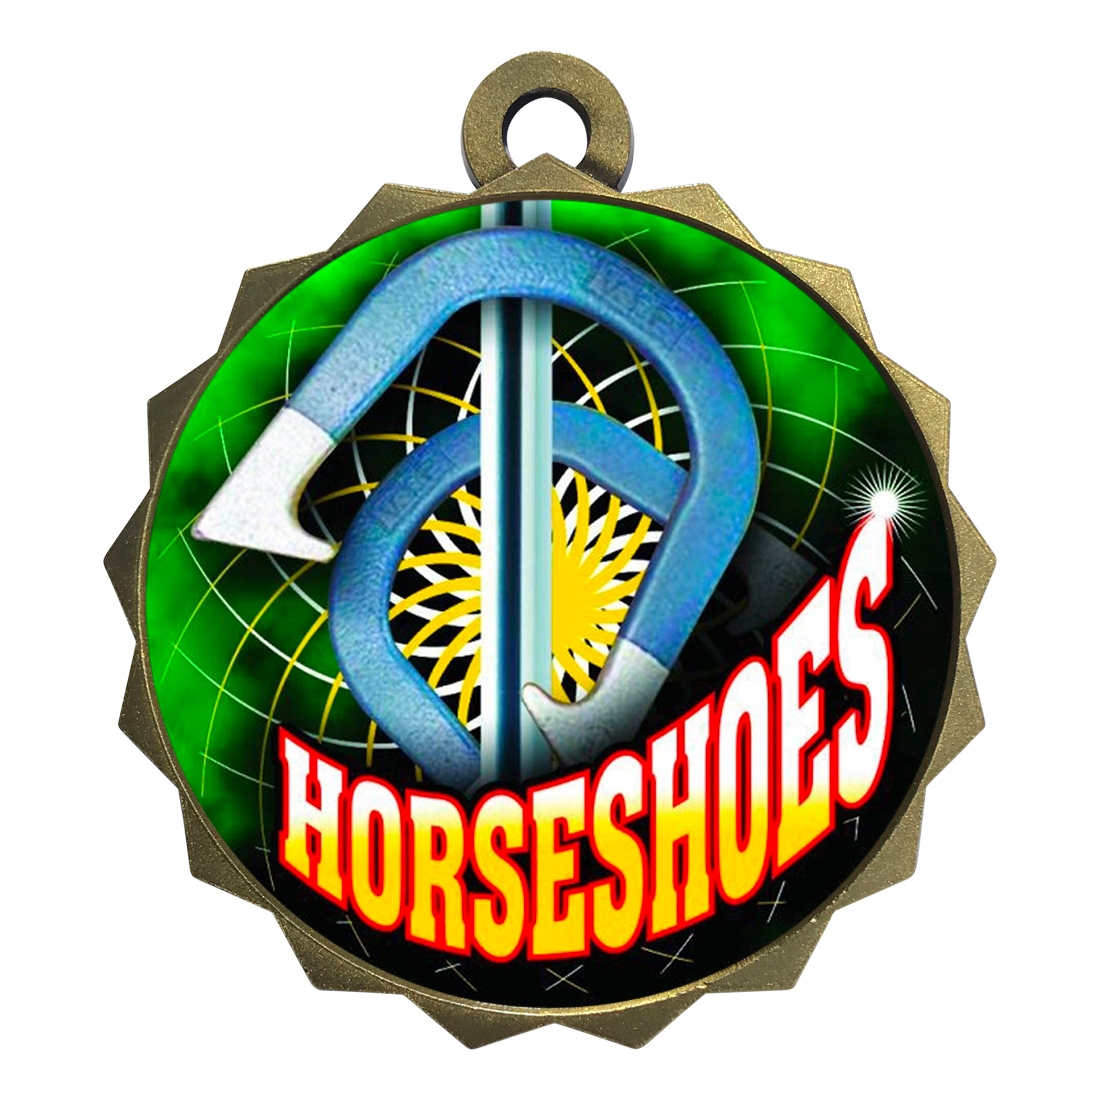 2-1/4" Horseshoes Medal